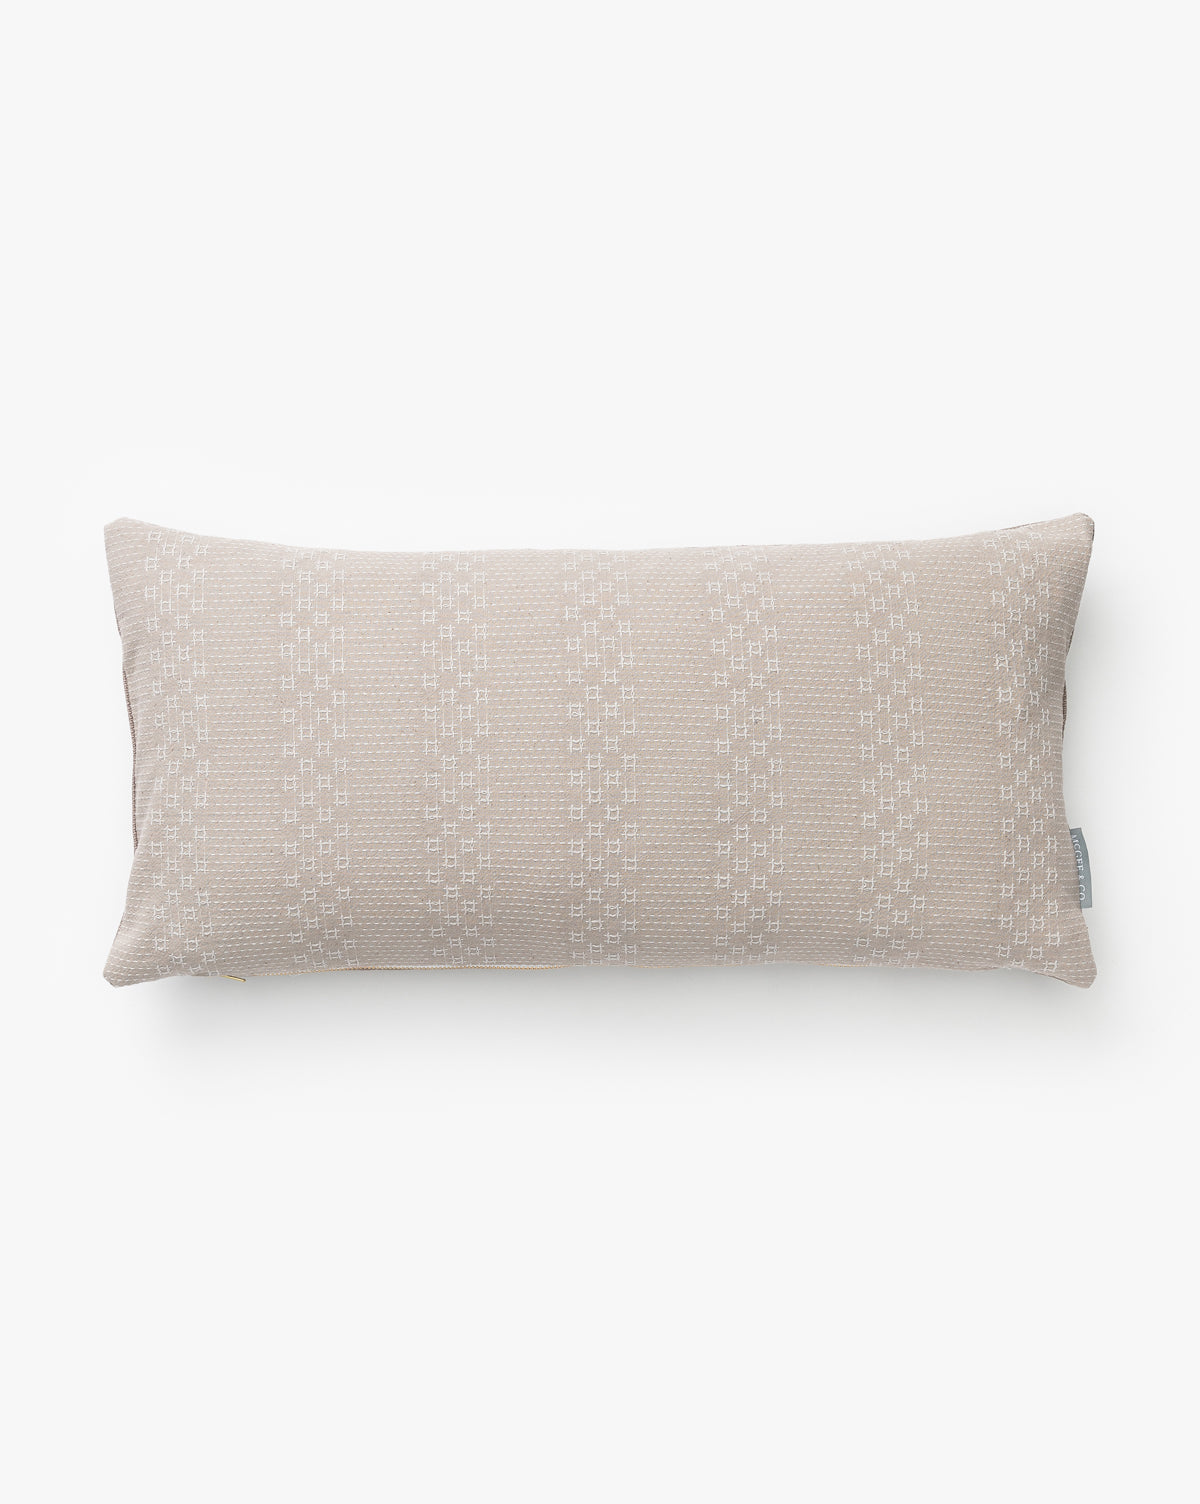 Tangren, Vintage Gray Crosshatch Pillow Cover No. 5